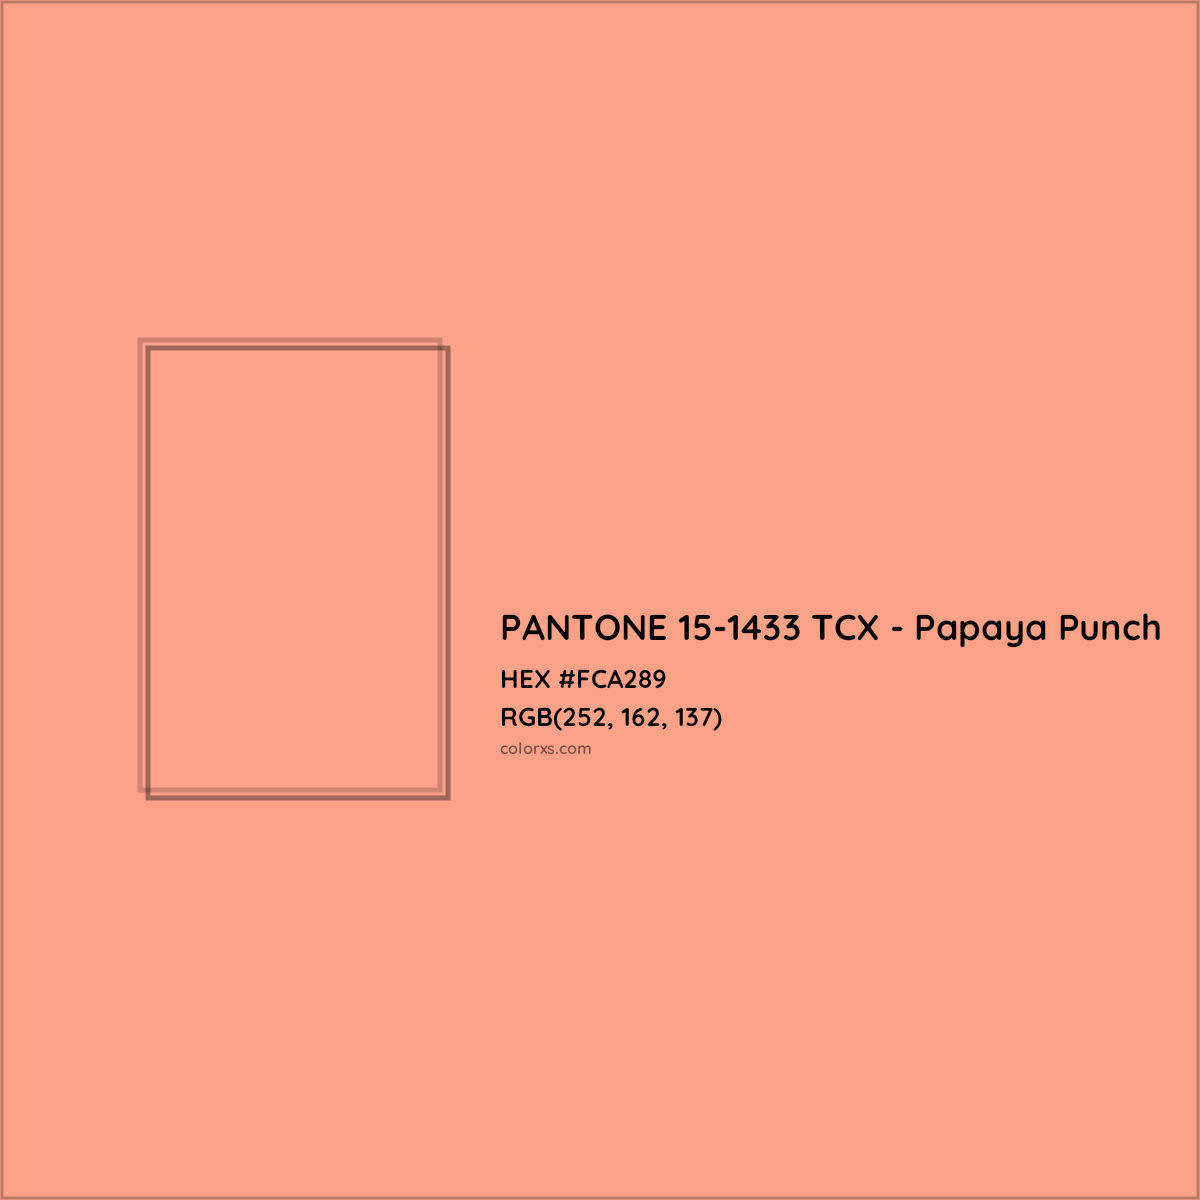 HEX #FCA289 PANTONE 15-1433 TCX - Papaya Punch CMS Pantone TCX - Color Code